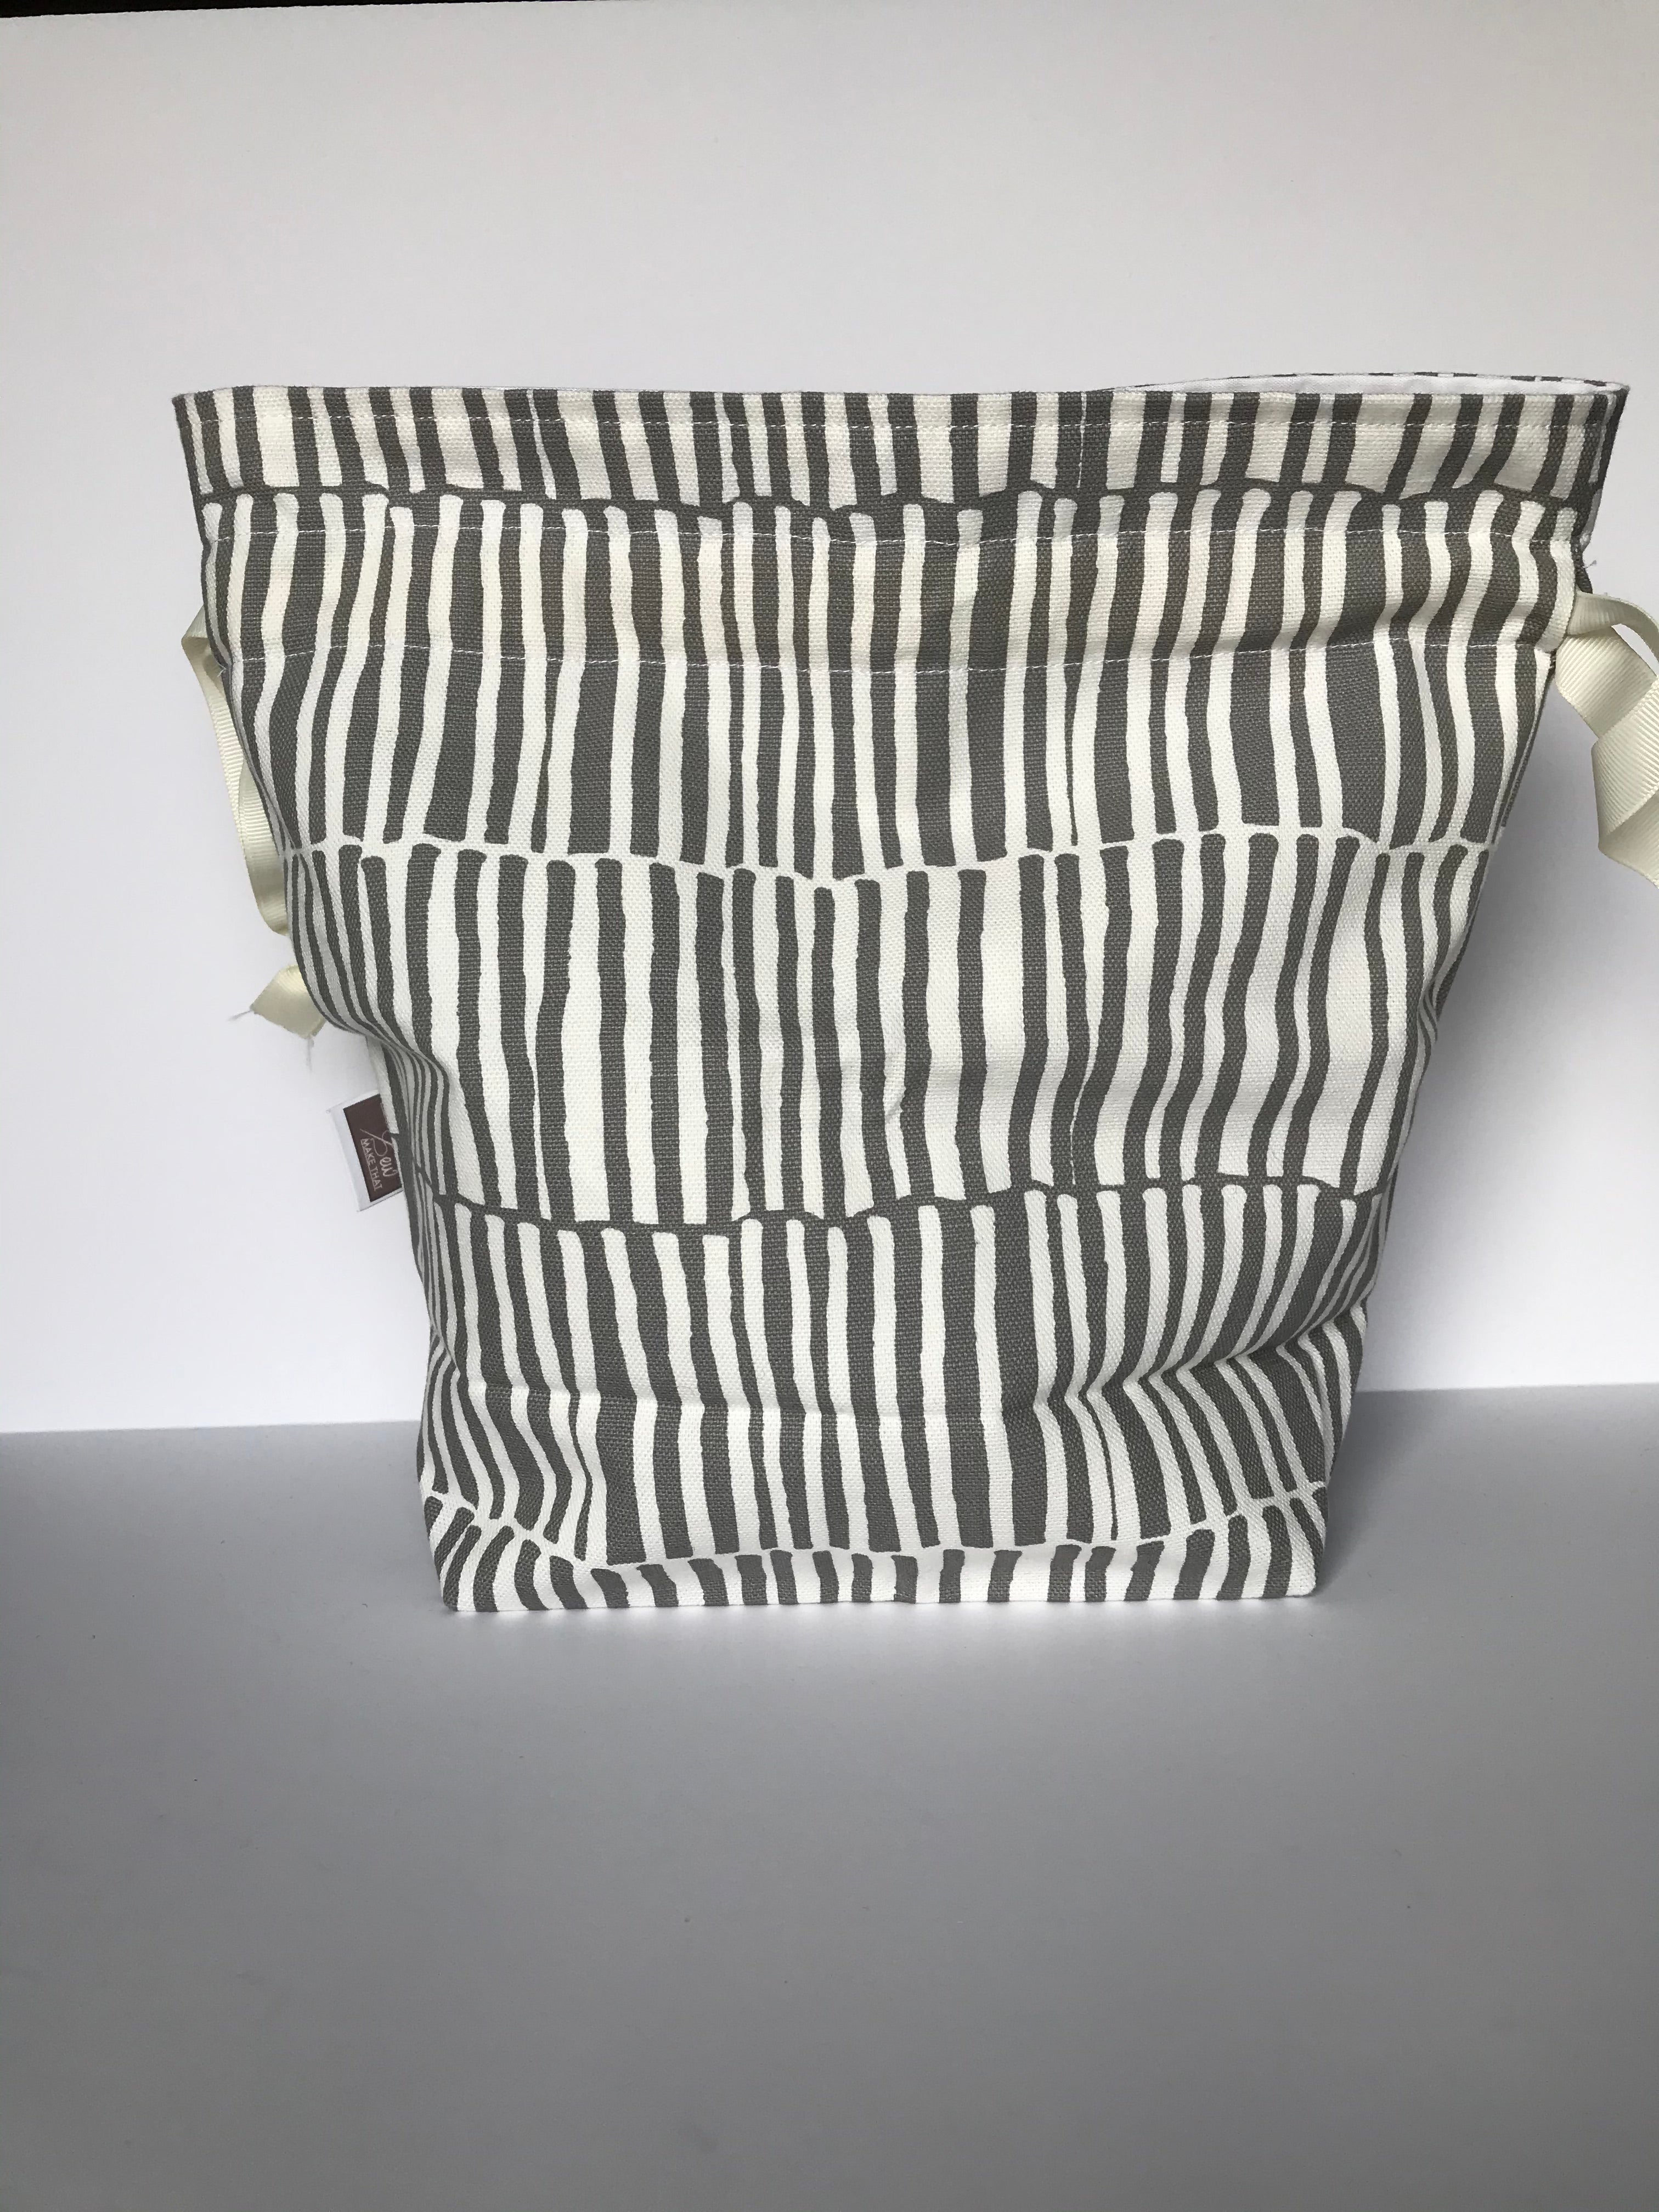 Small Drawstring Bag - White/grey stripes